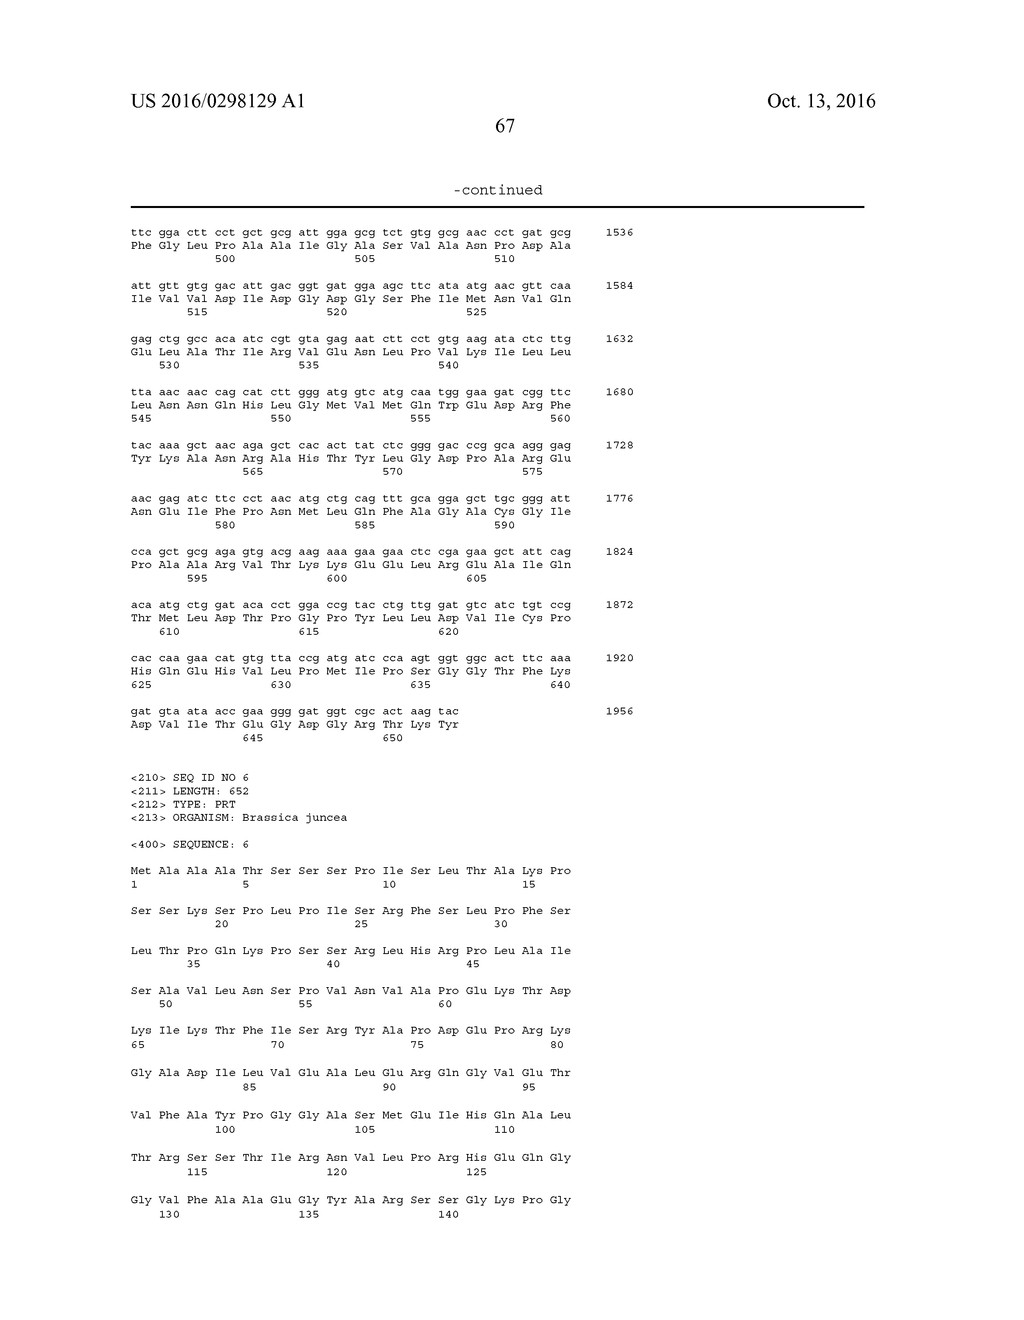 ALS INHIBITOR HERBICIDE TOLERANT MUTANT PLANTS - diagram, schematic, and image 76